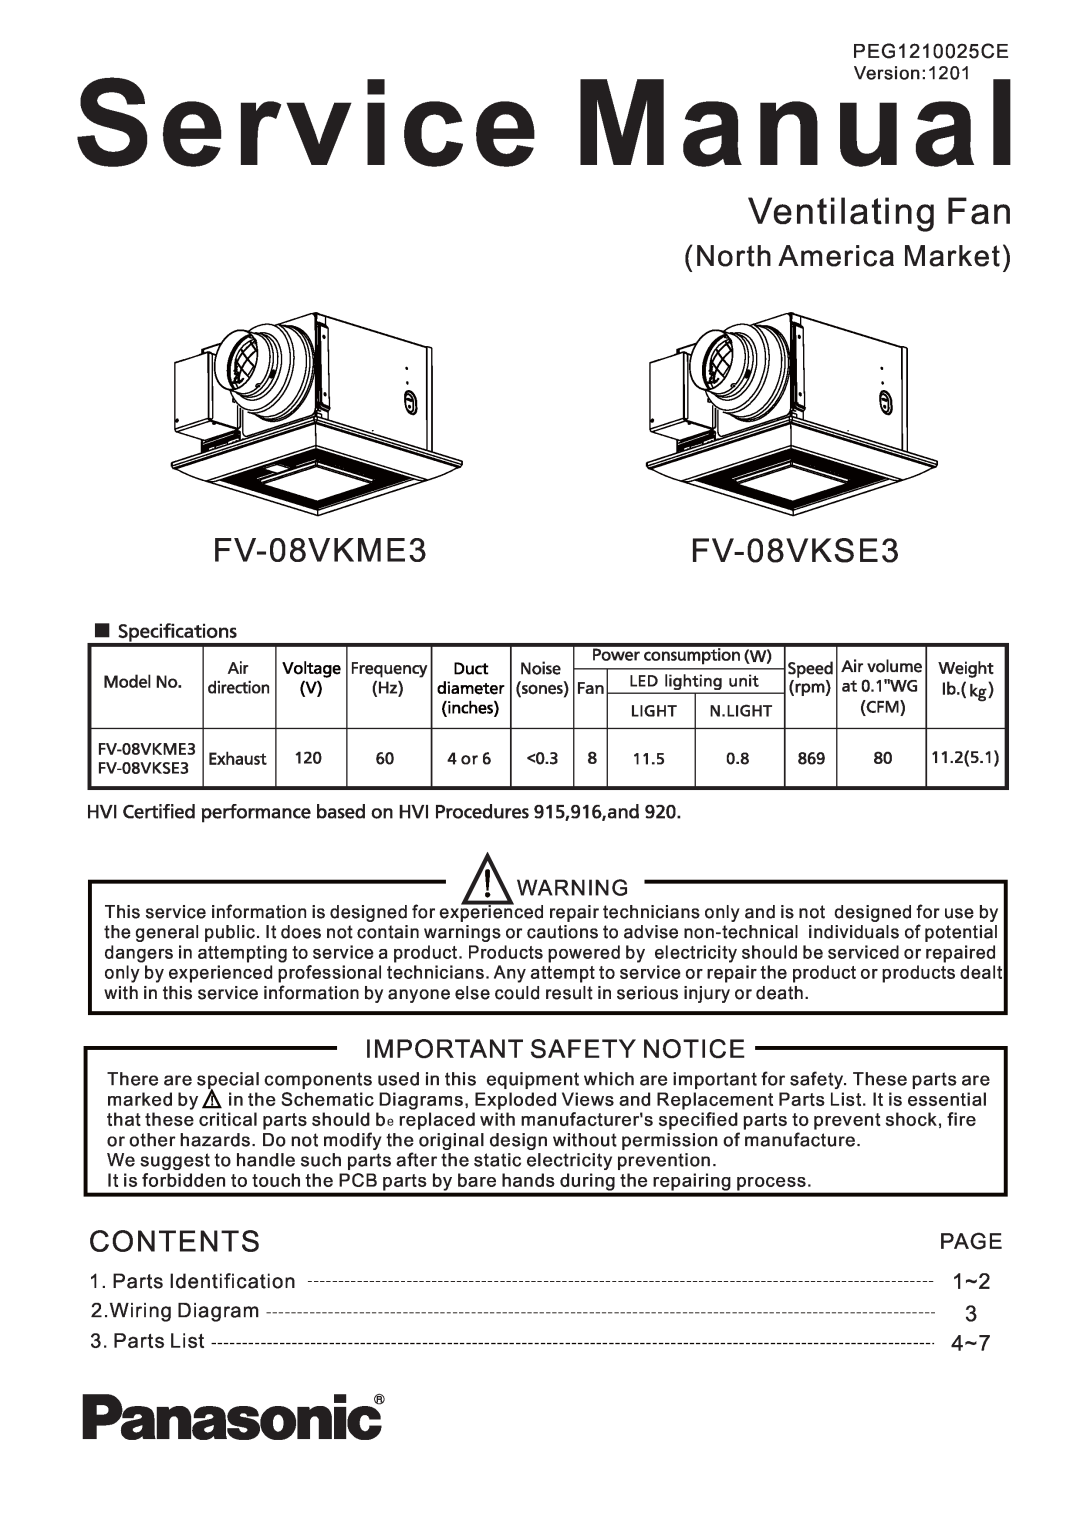 Panasonic service manual FV-08VKME3FV-08VKSE3, Ventilating Fan, North America Market, Contents, Important Safety Notice 